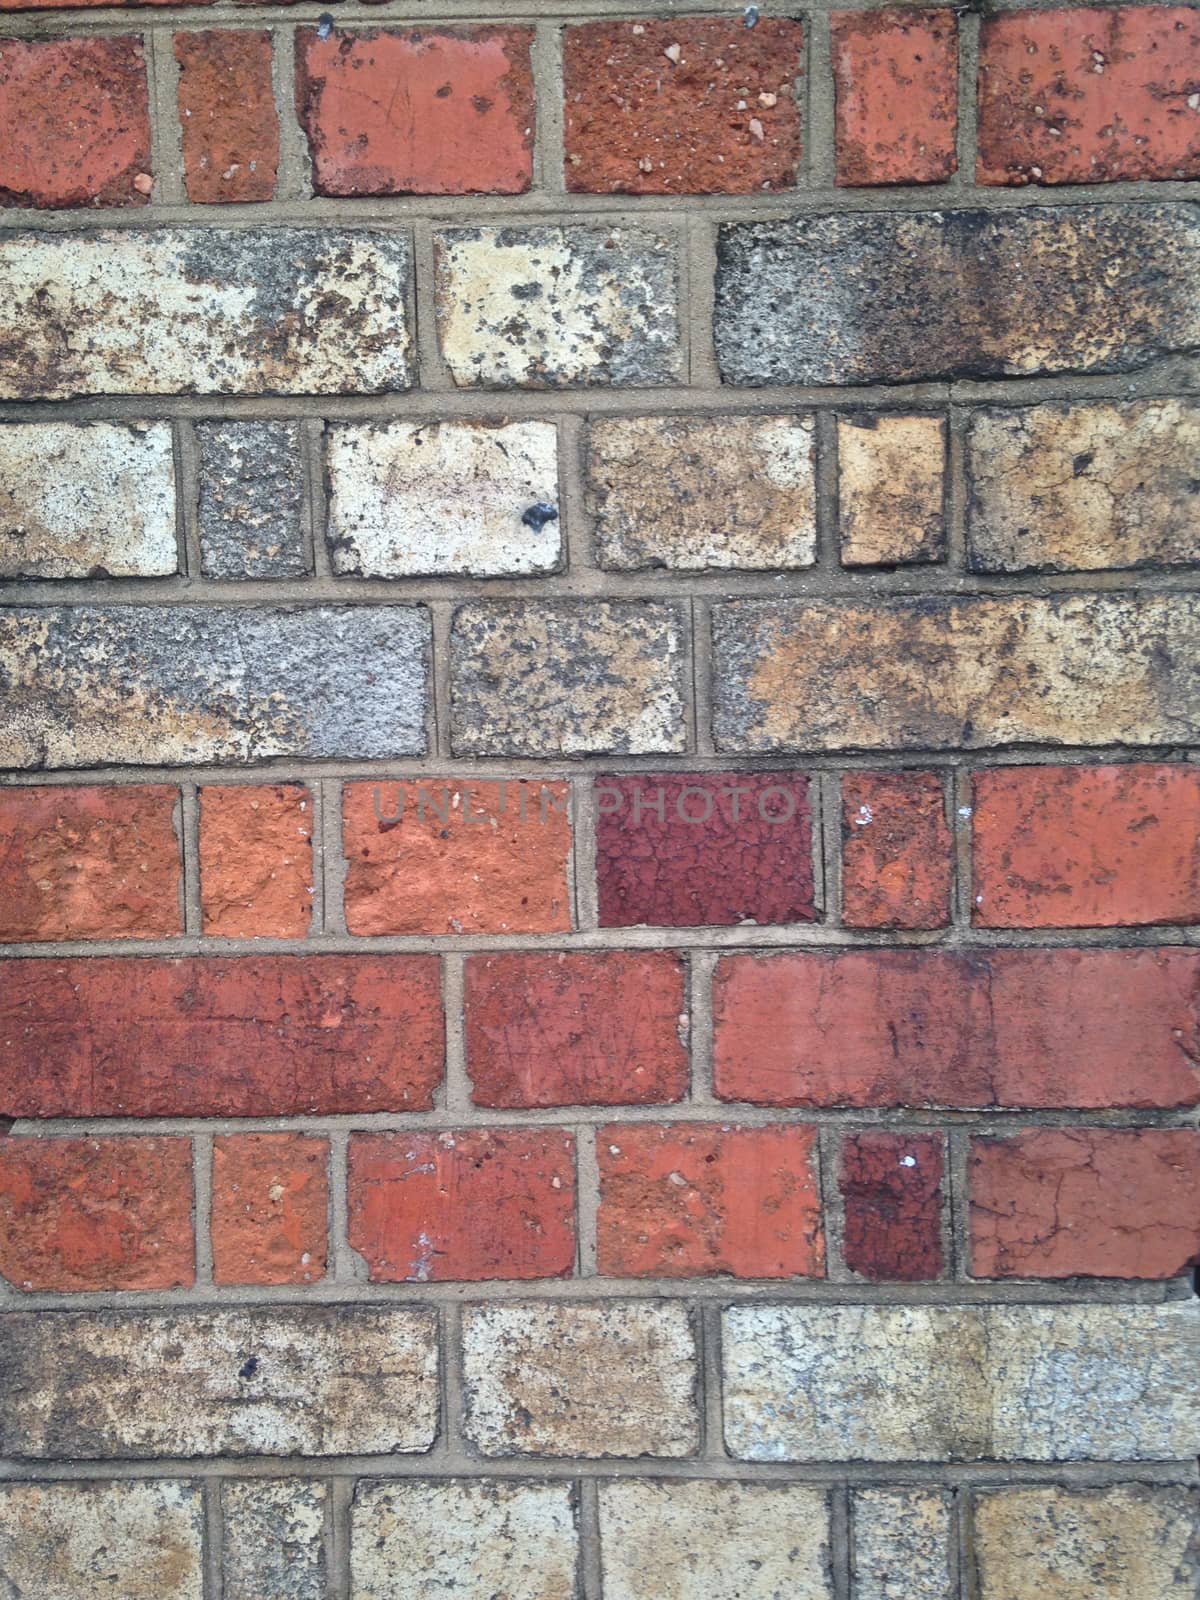 Dirty red brick wall by eyeofpaul